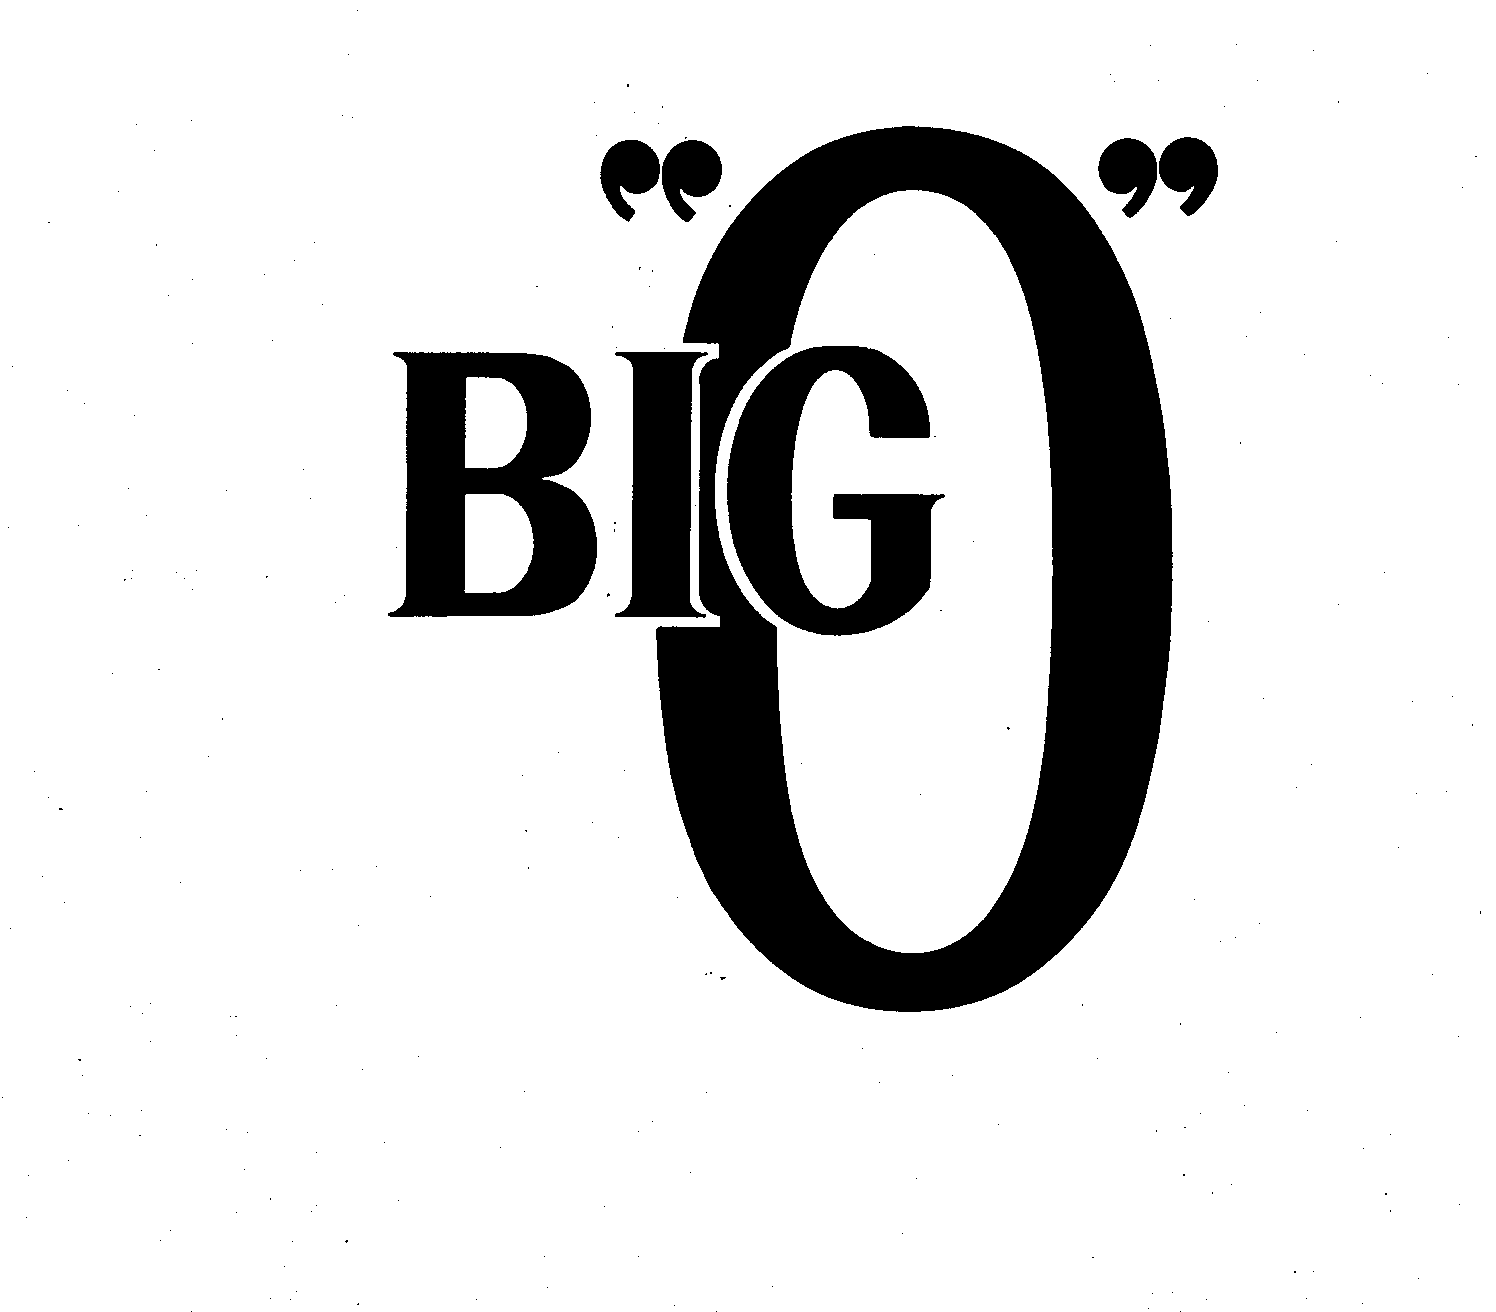  BIG "O"